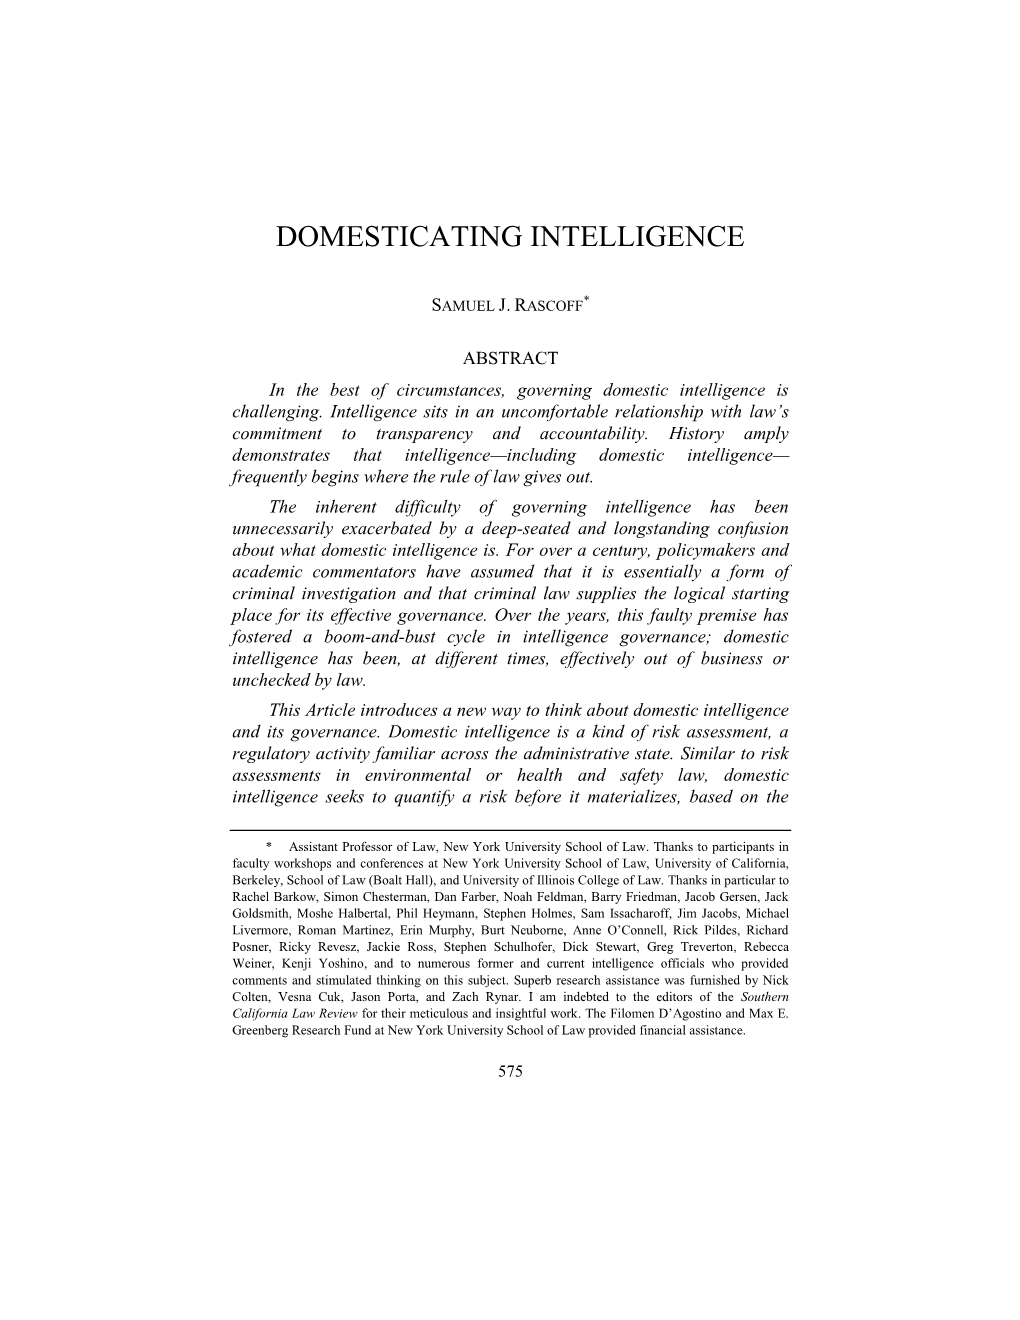 Domesticating Intelligence